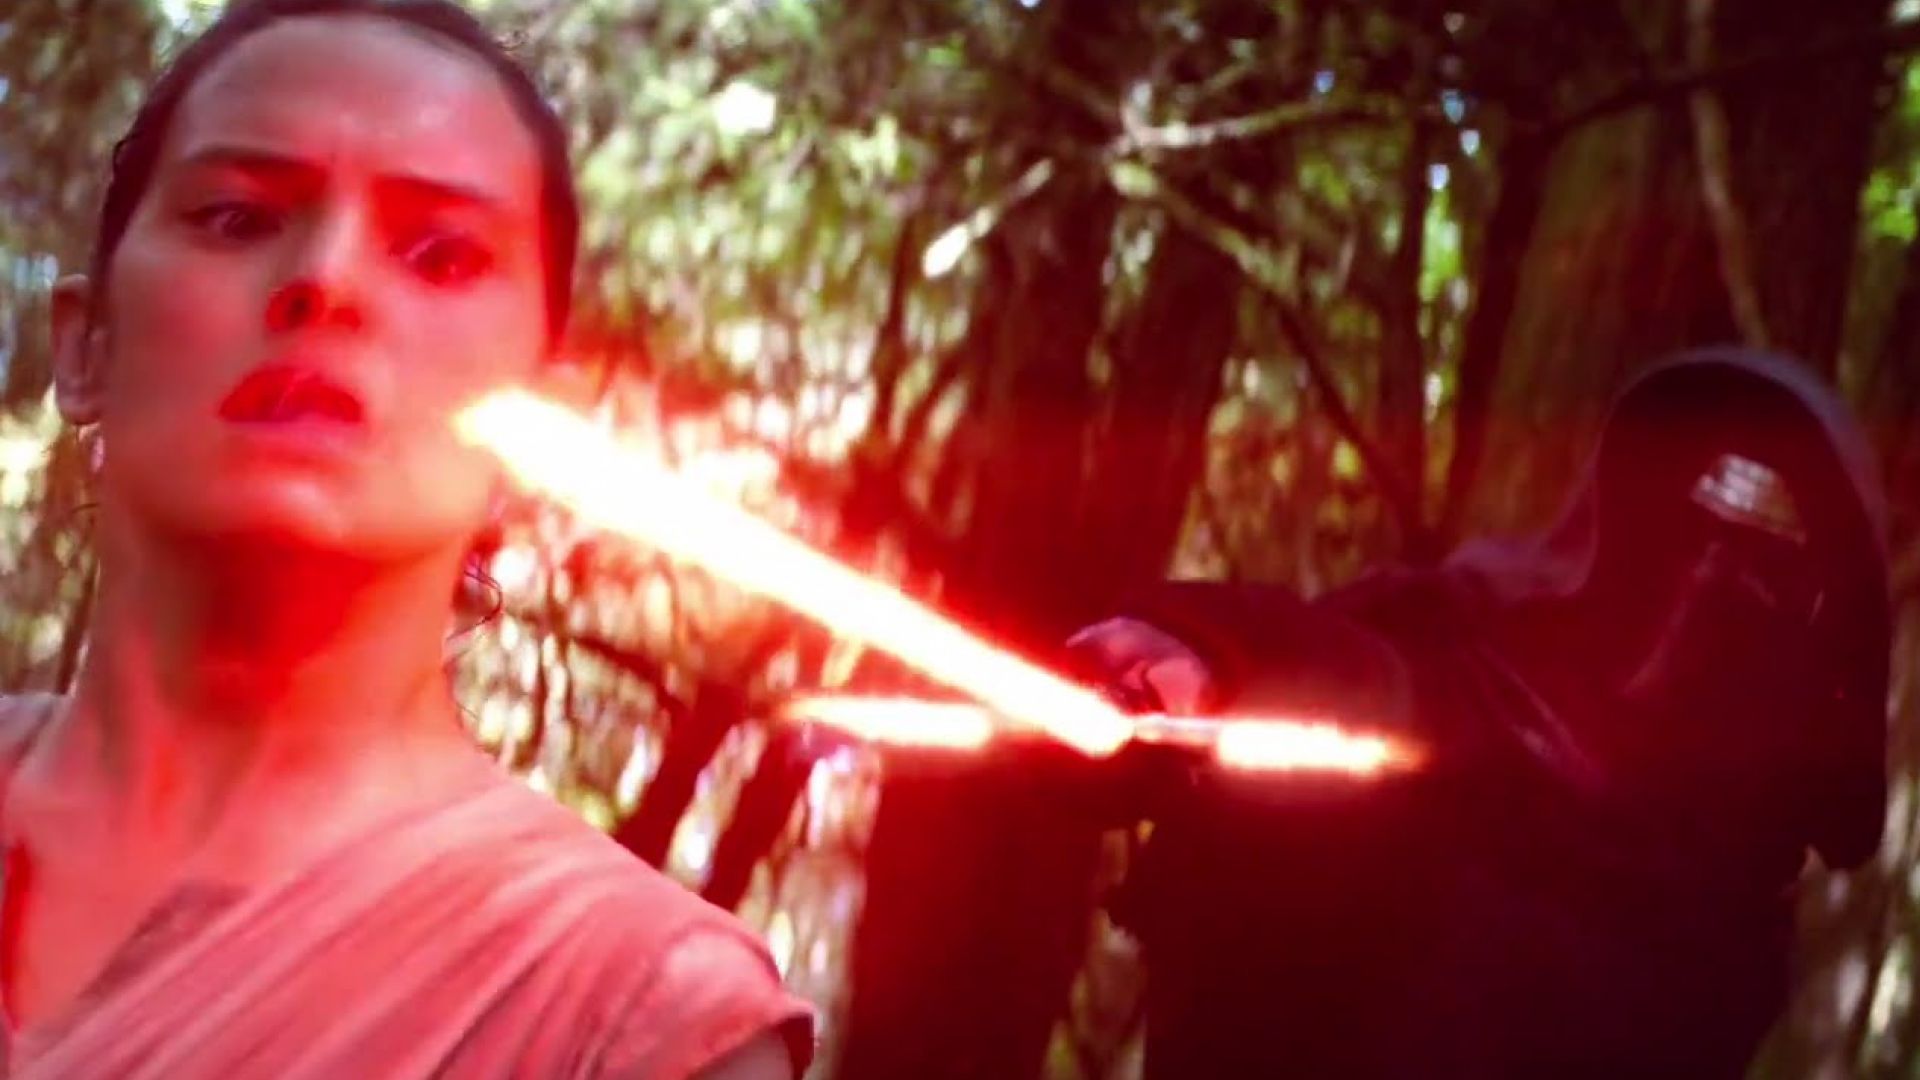 Star Wars: The Force Awakens Official International Trailer 